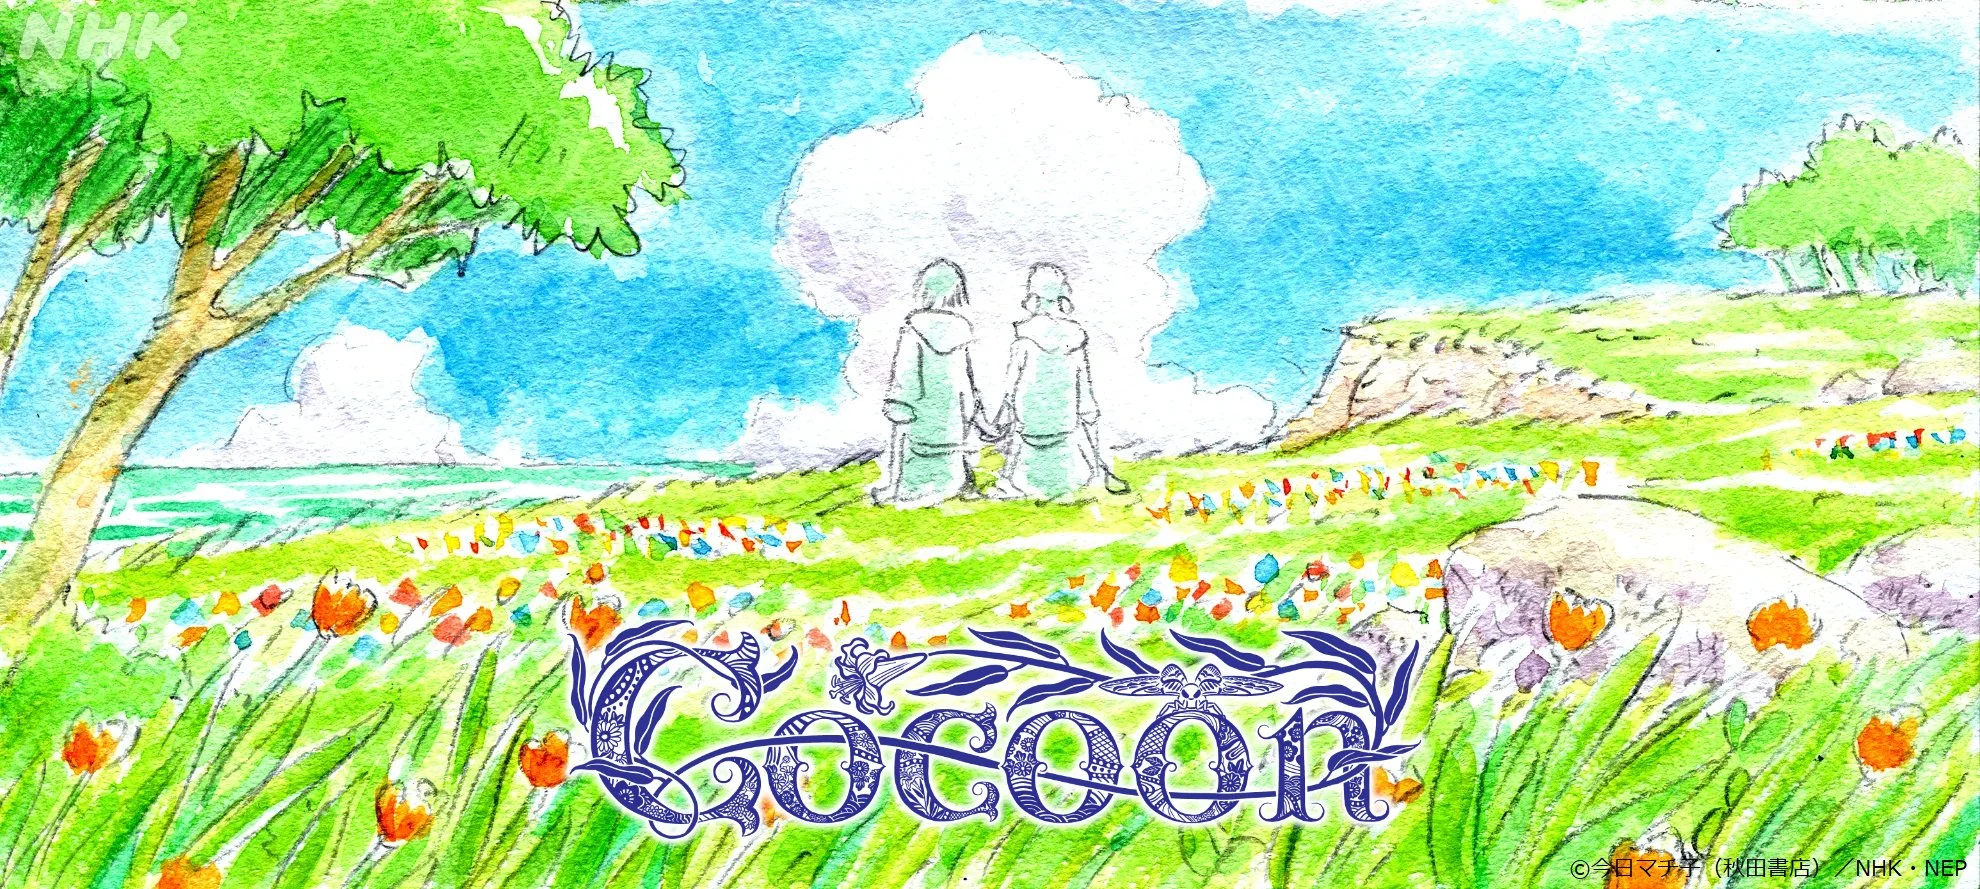 Ветеран Studio Ghibli cпродюсирует новое аниме по мотивам манги Cocoon - фото 1